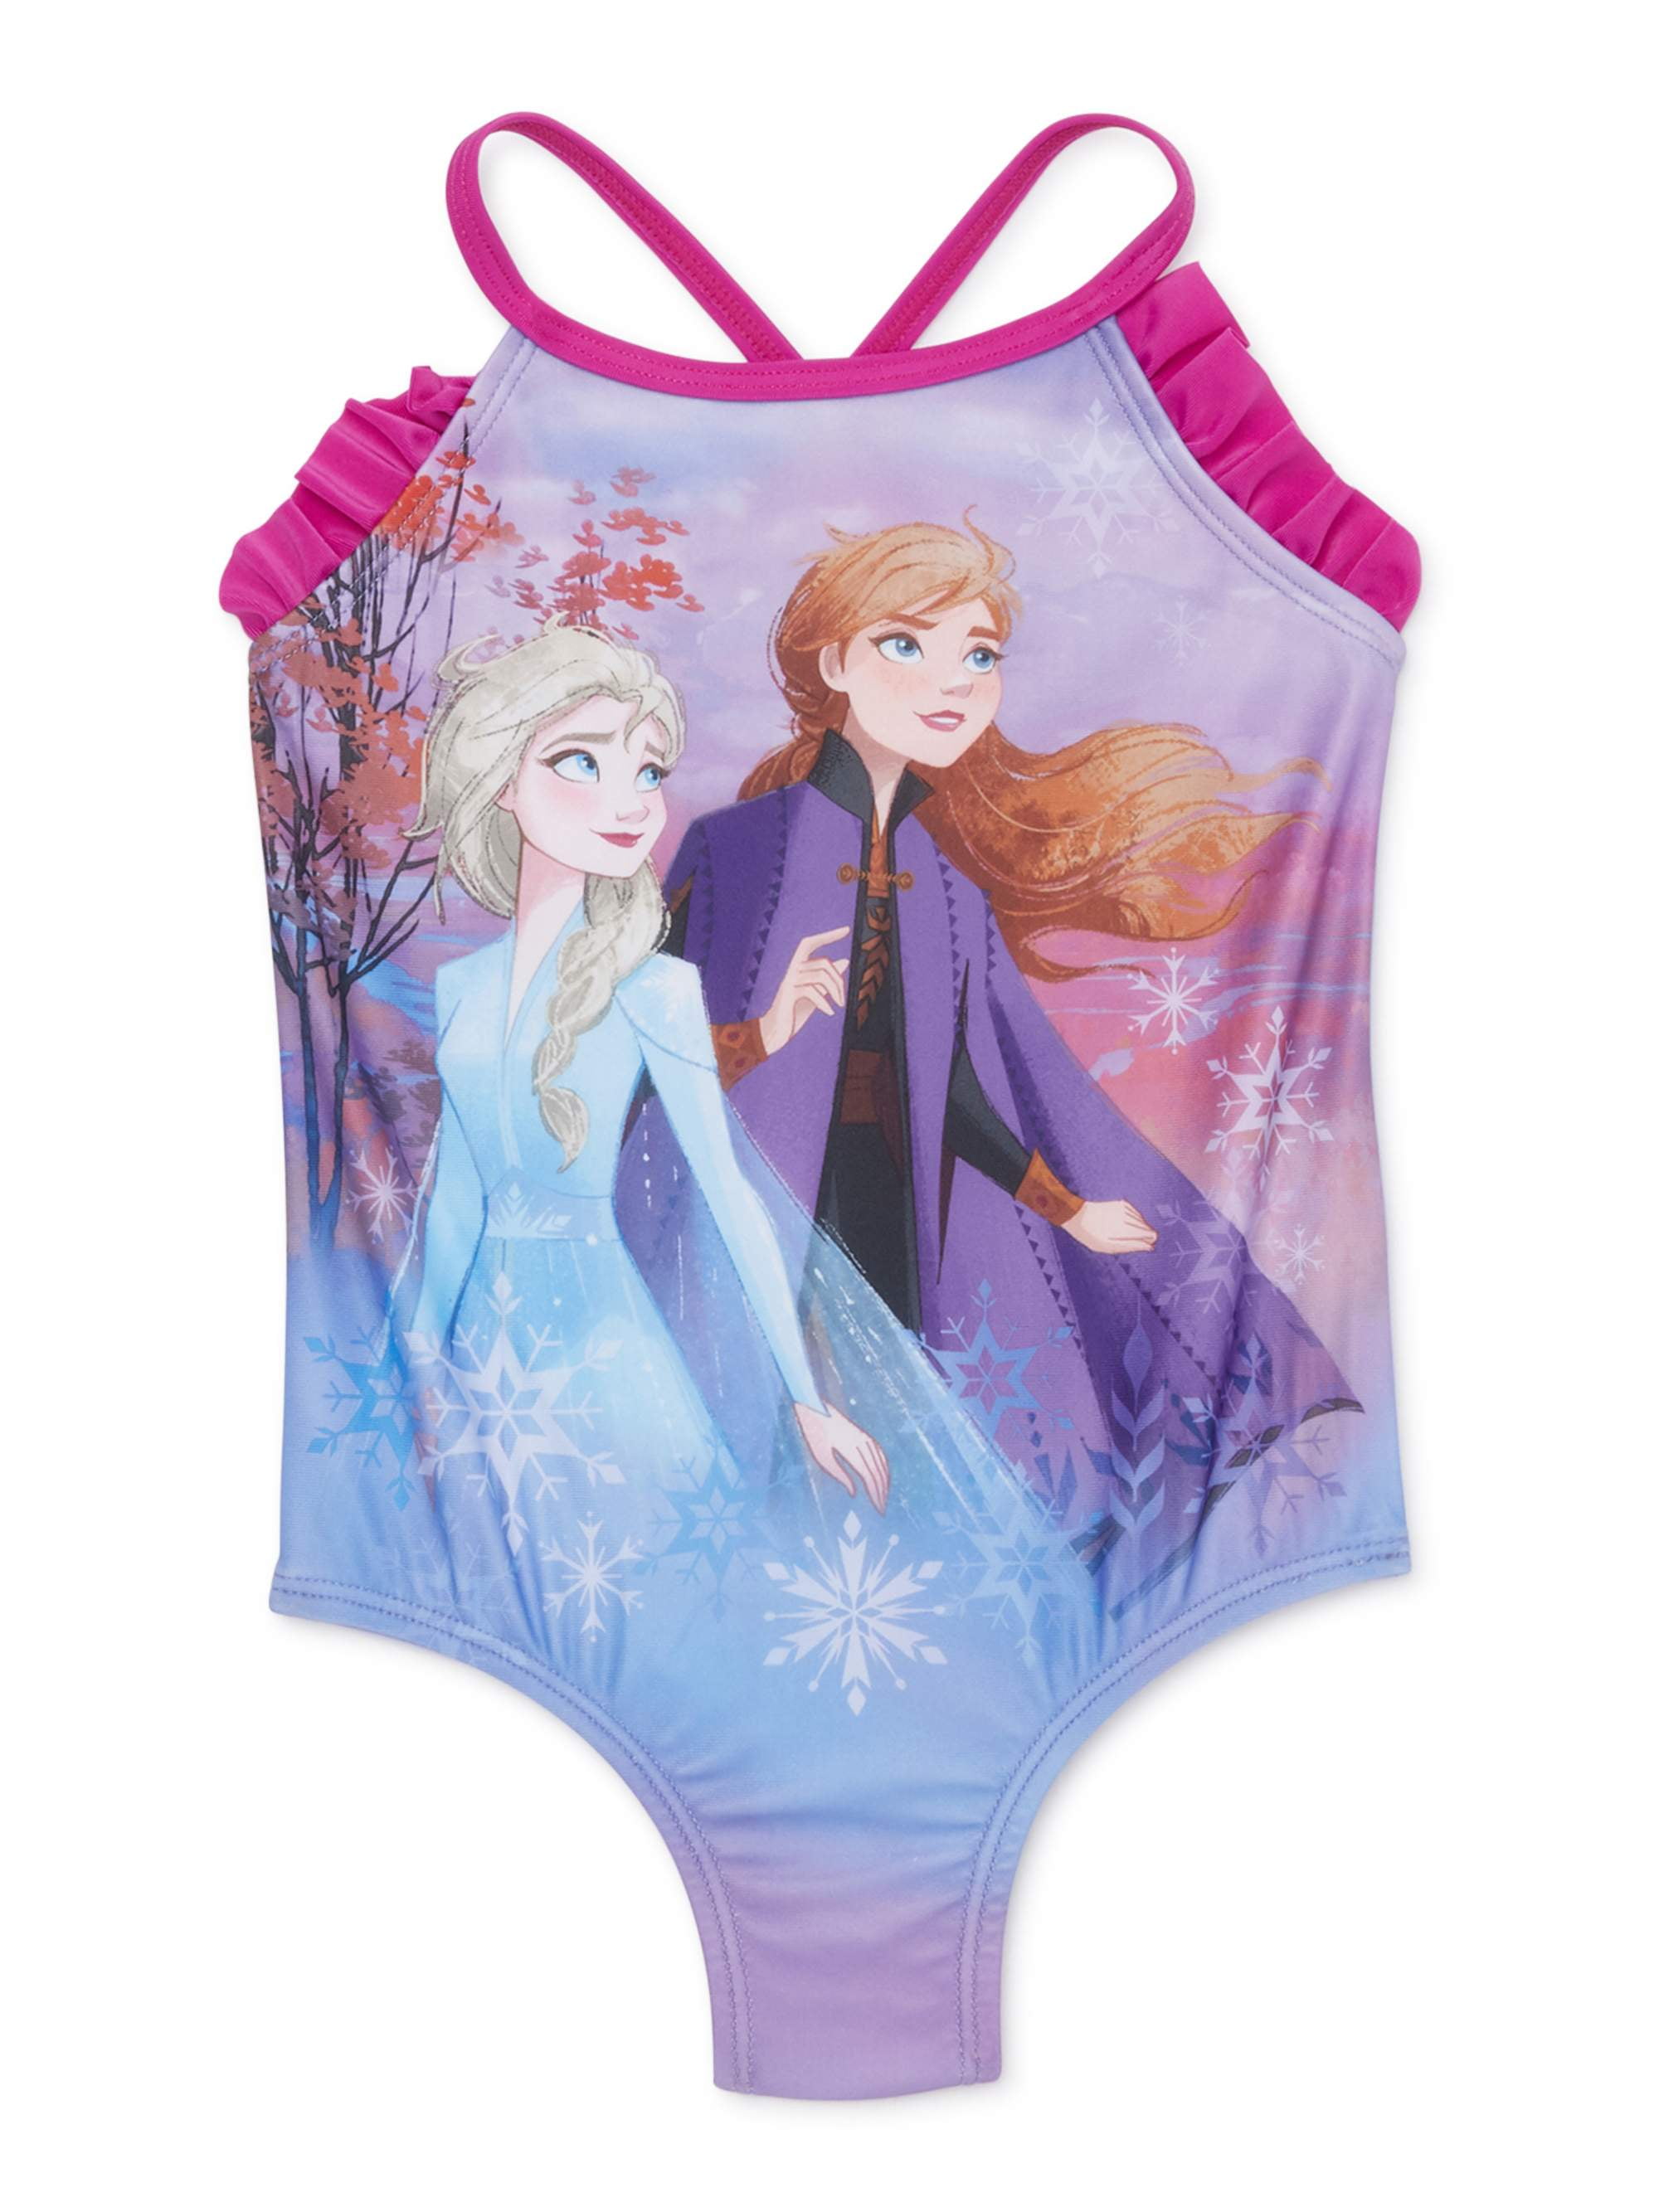 Disney Frozen sisters Swimming Costume Girls Purple One piece size 1-5 years. 